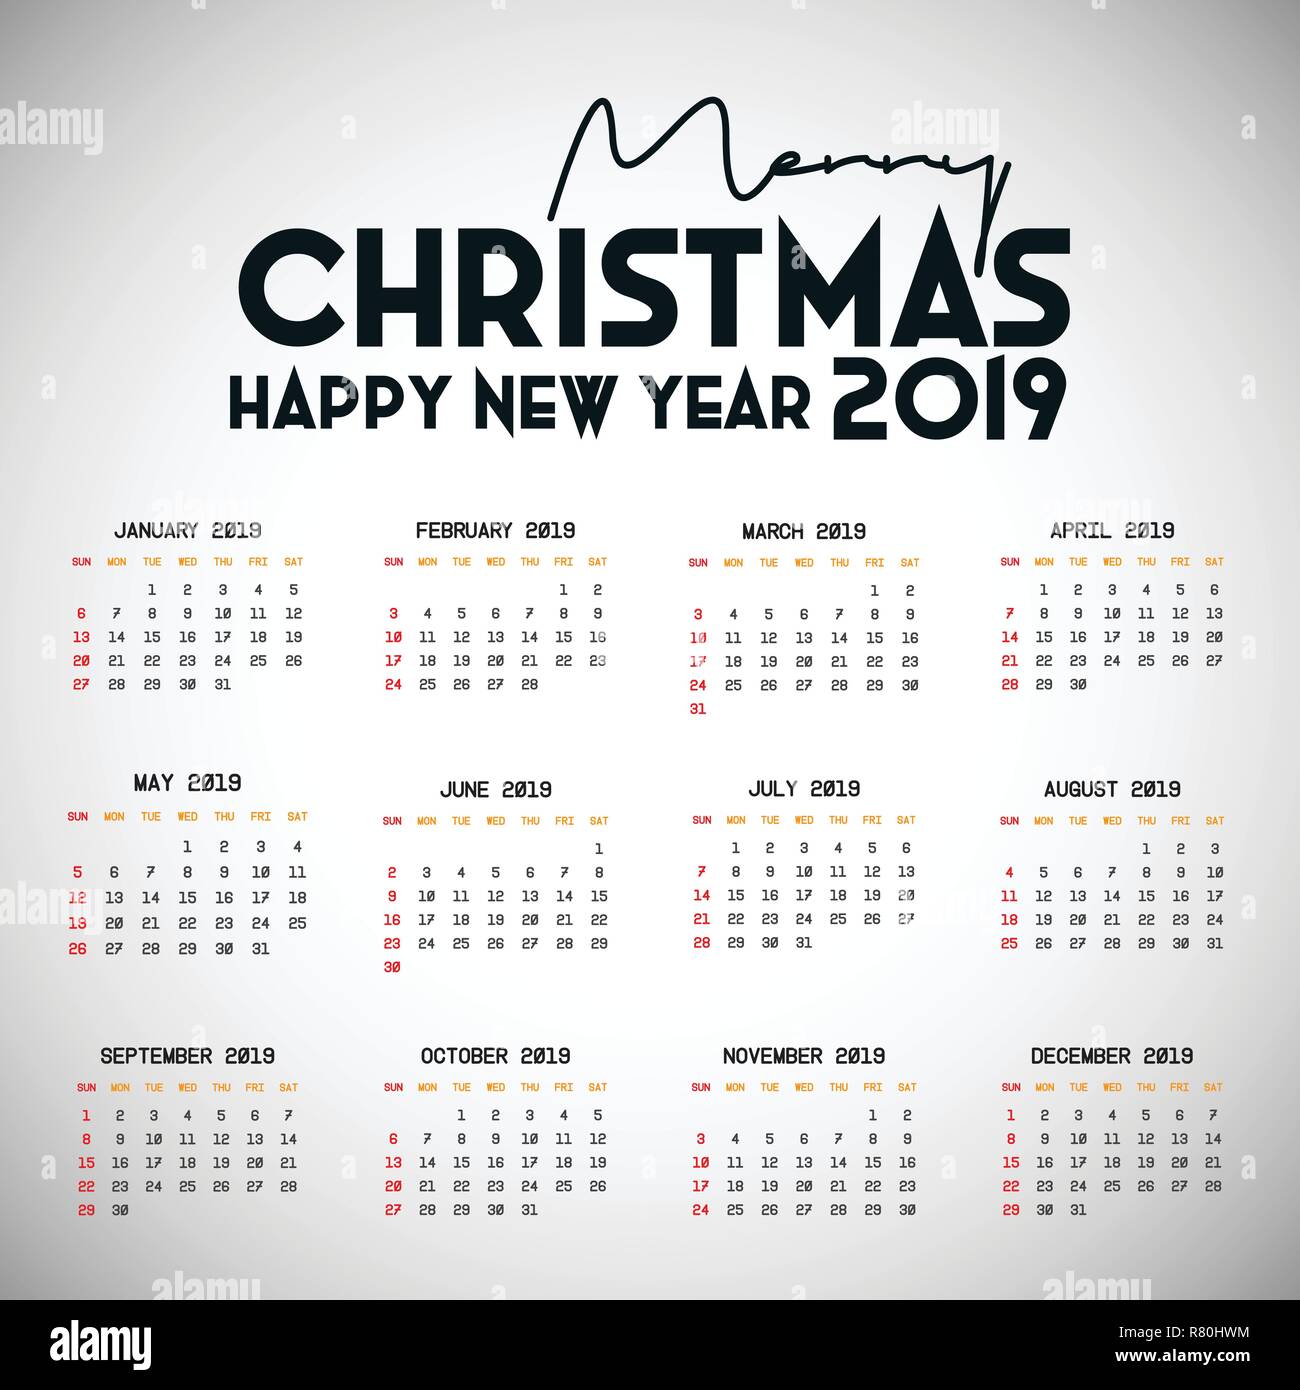 Simple 2020 Year Calendar Stock Photos & Simple 2020 Year Calendar Stock Images - Alamy1300 x 1390